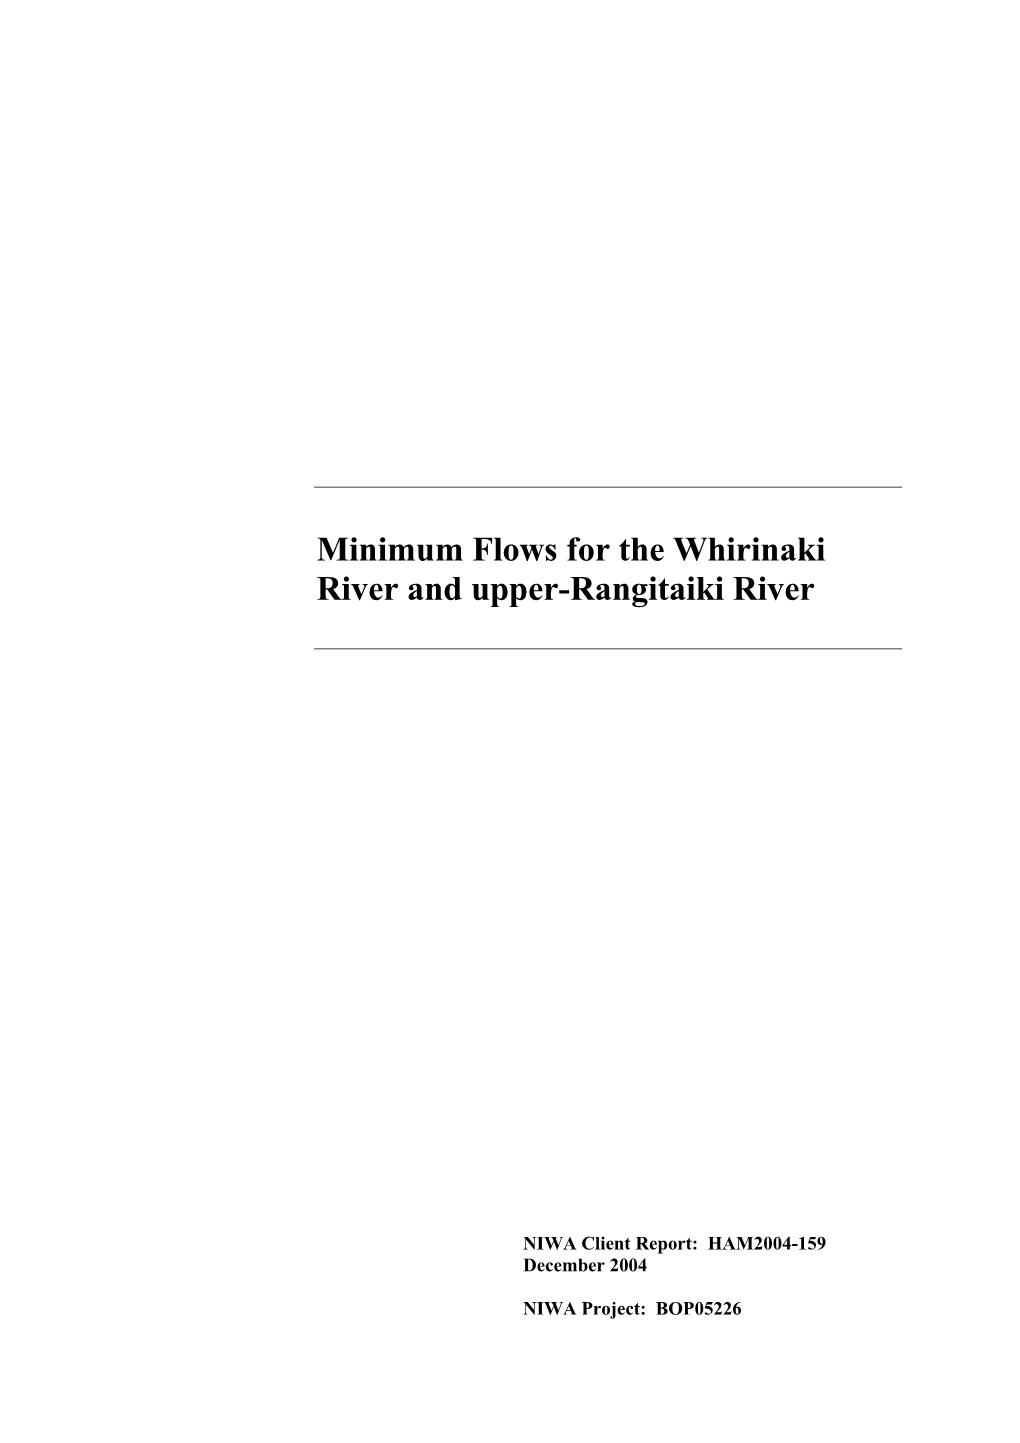 Minimum Flows for the Whirinaki River and Upper-Rangitaiki River